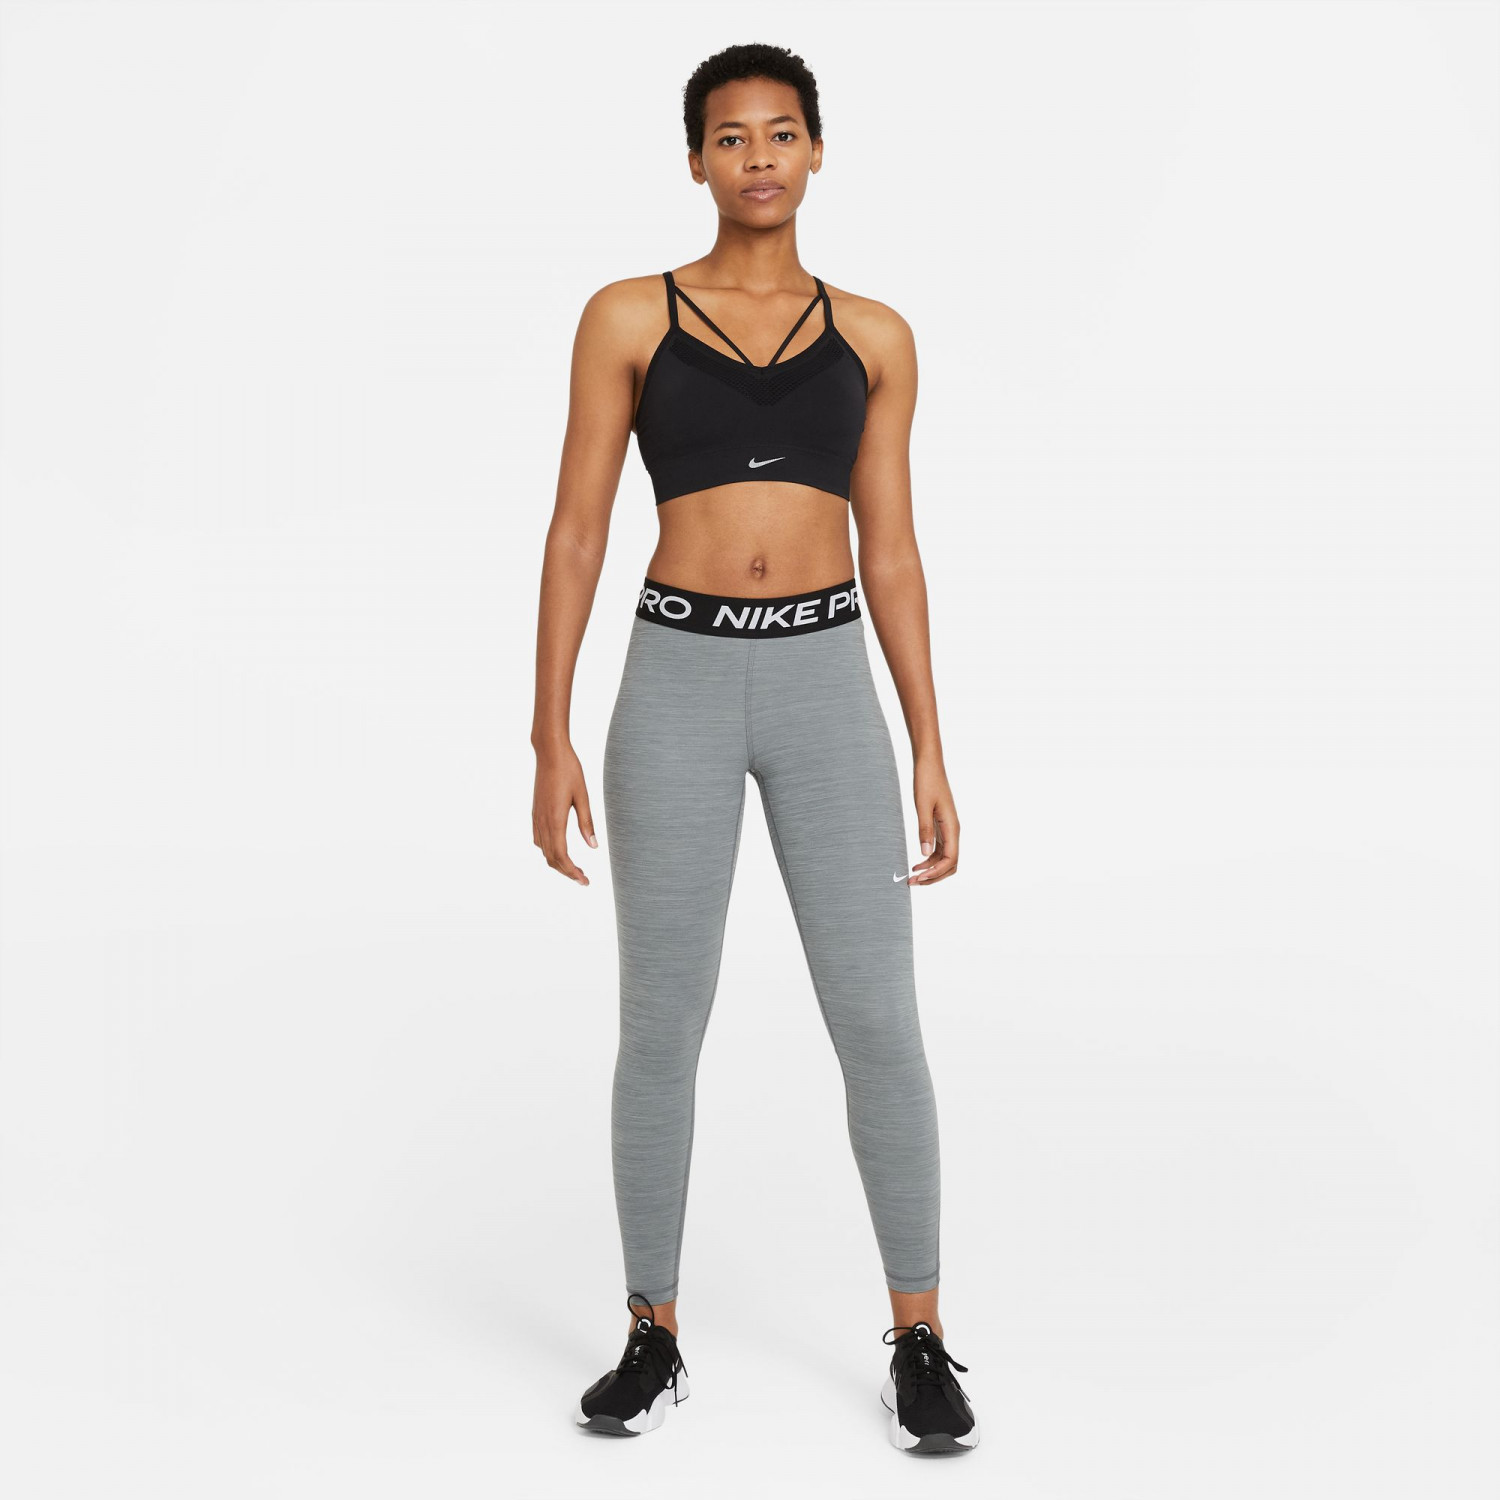 Legging femme Nike Pro 365 - Pantalons / leggings - Femme - Entretien  Physique